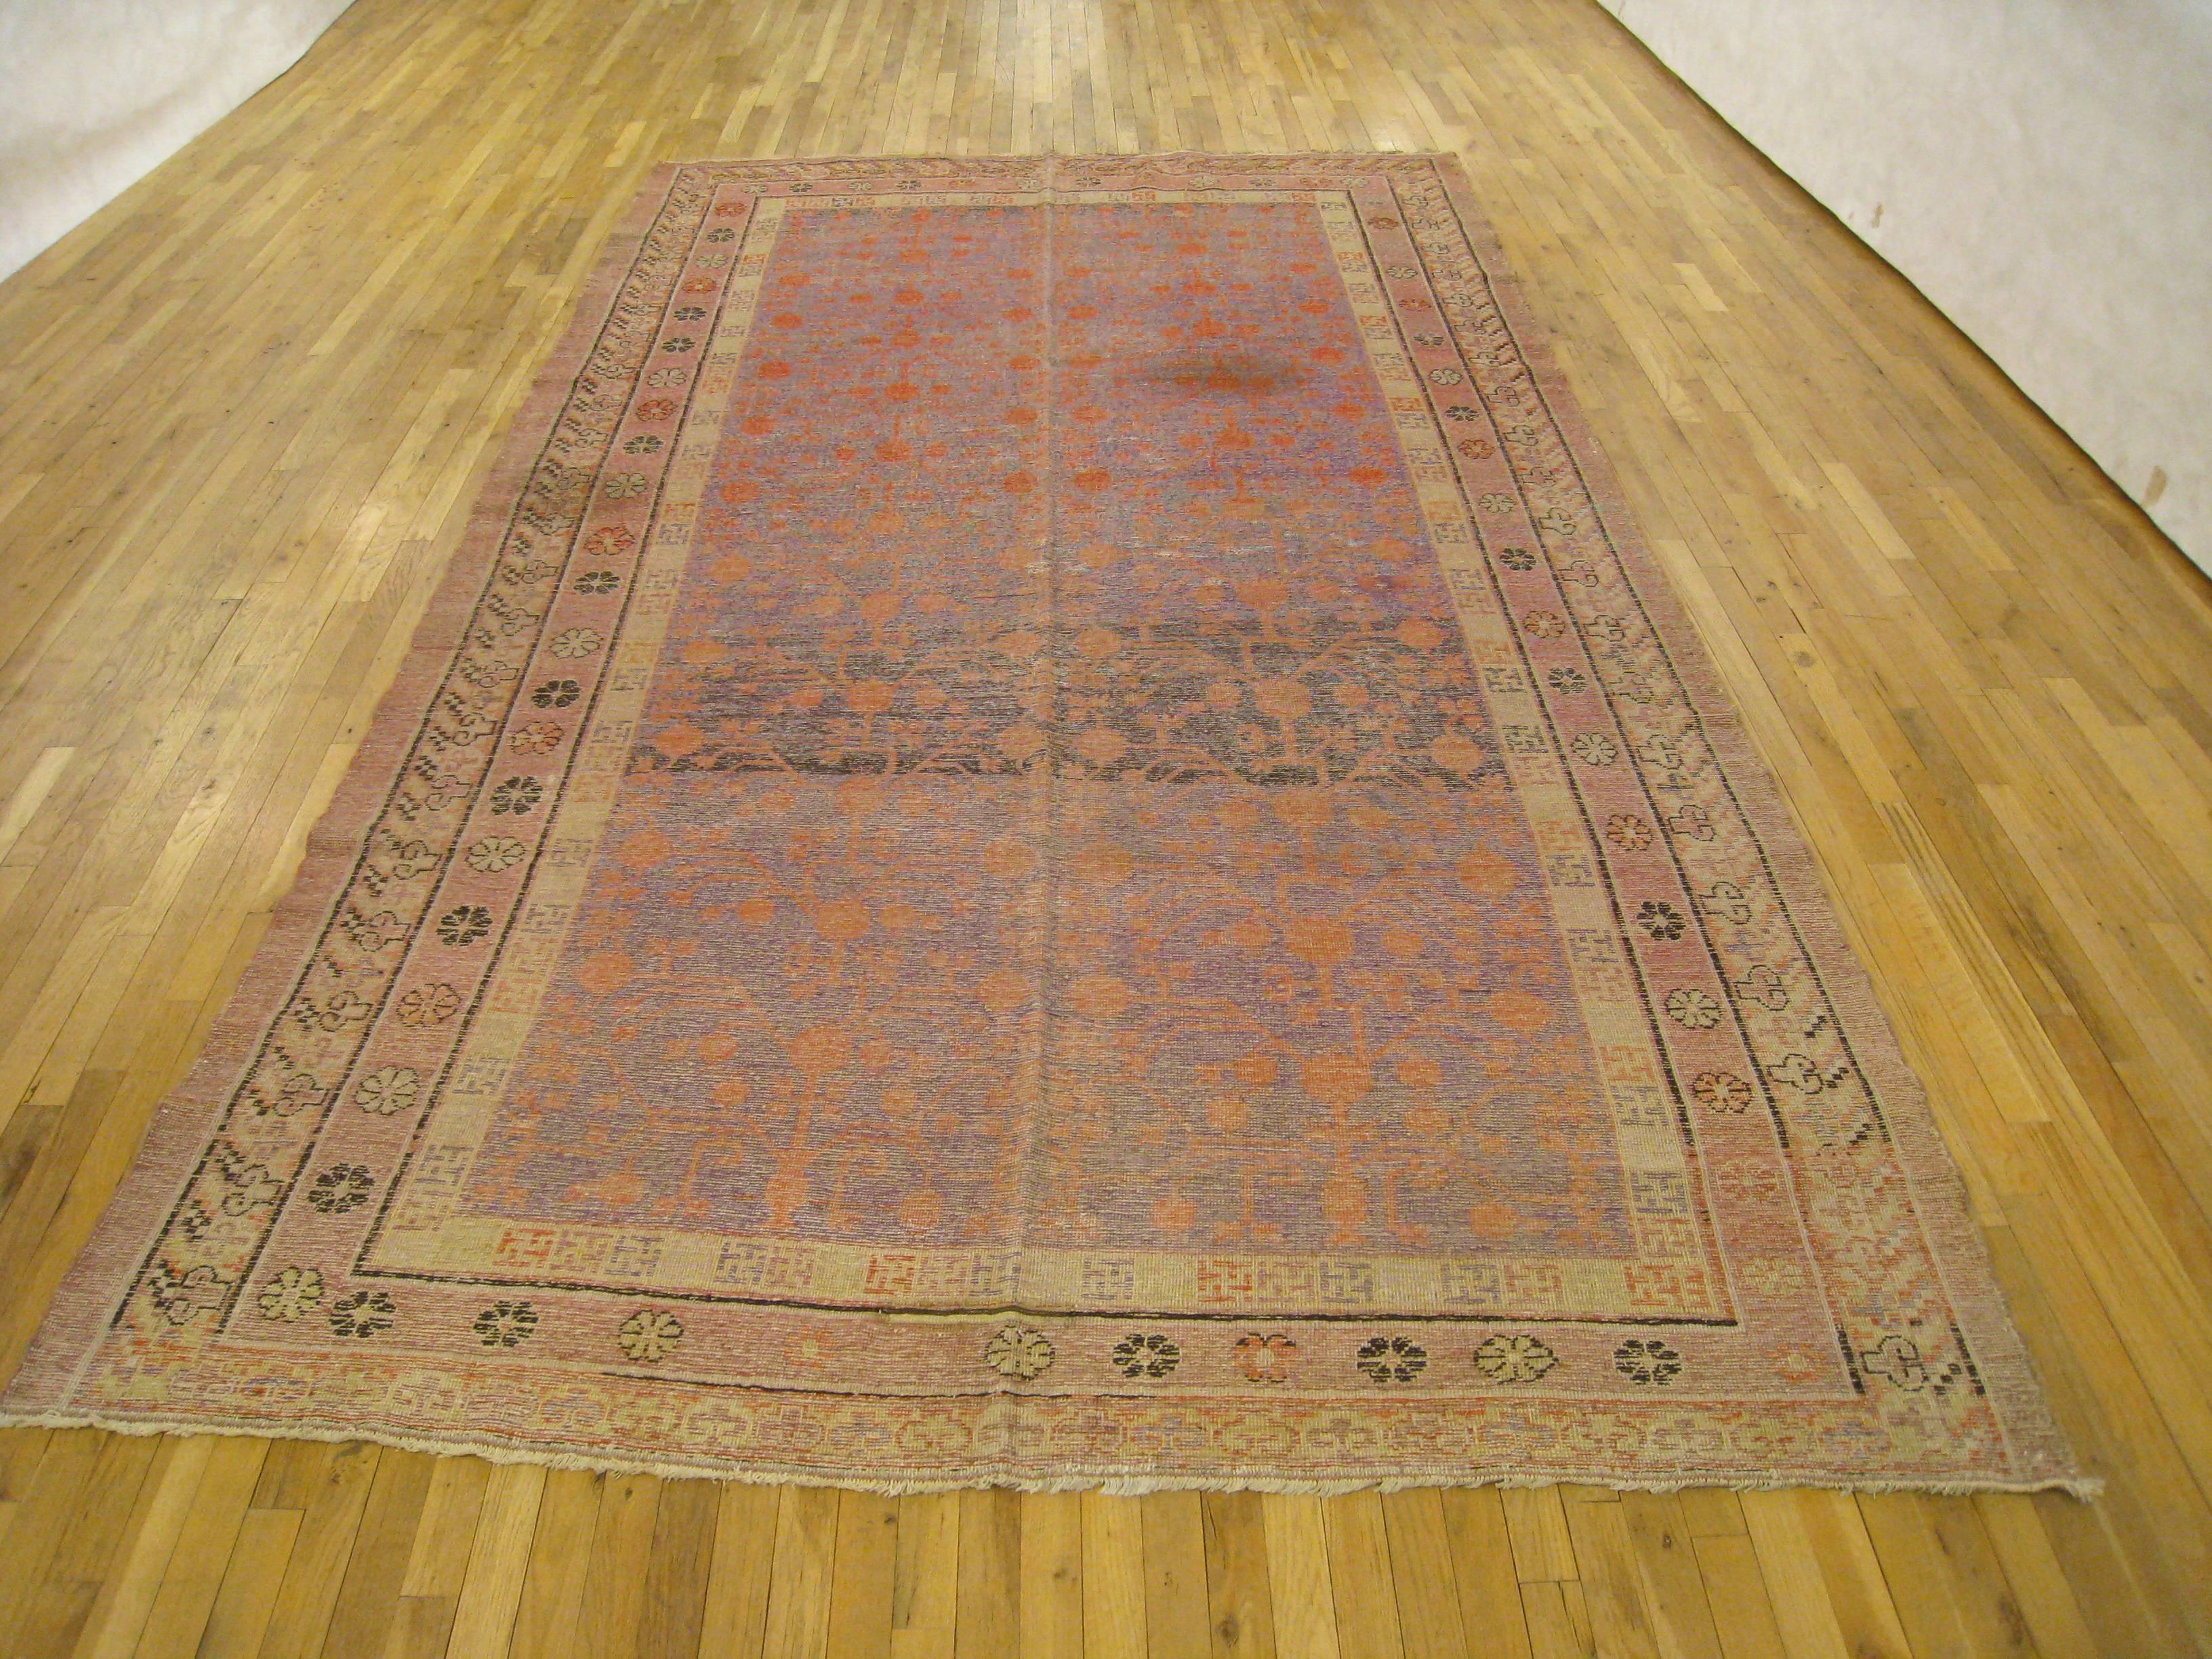 Late 19th Century Antique Khotan Decorative Oriental Carpet in Gallery Size, circa 1890, Soft Blue For Sale